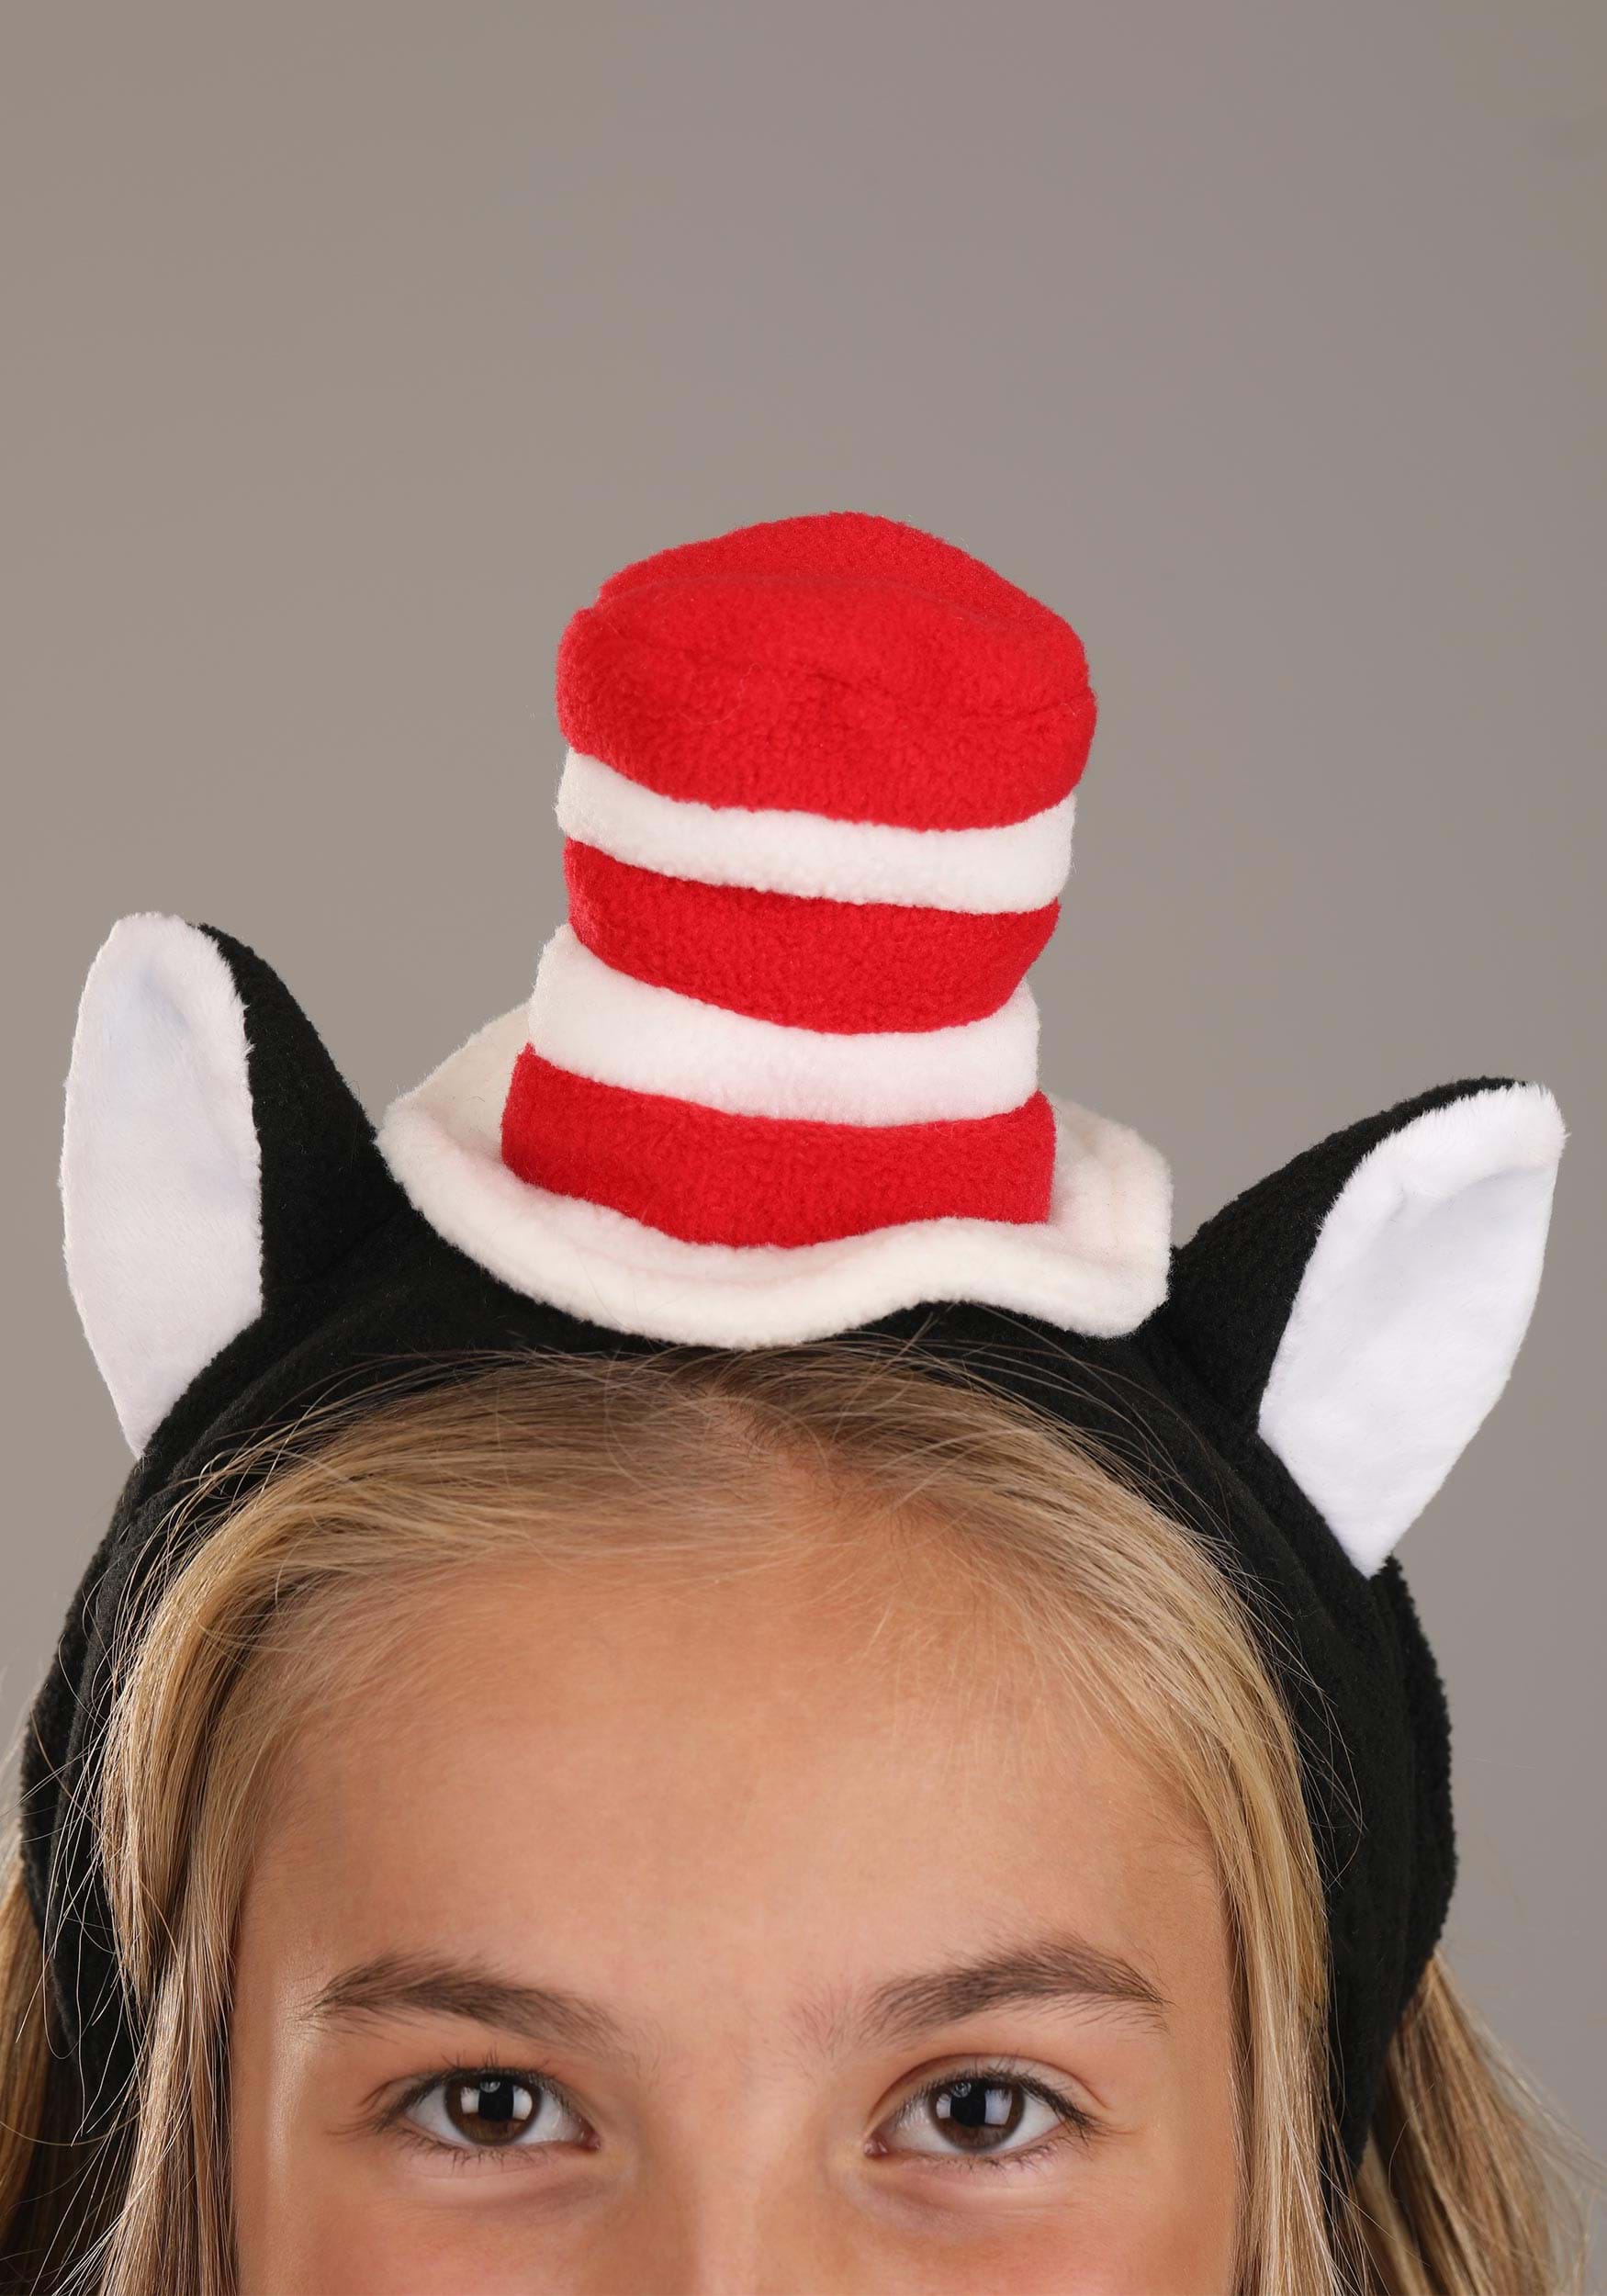 Cat In The Hat Soft Costume Headband Accessory